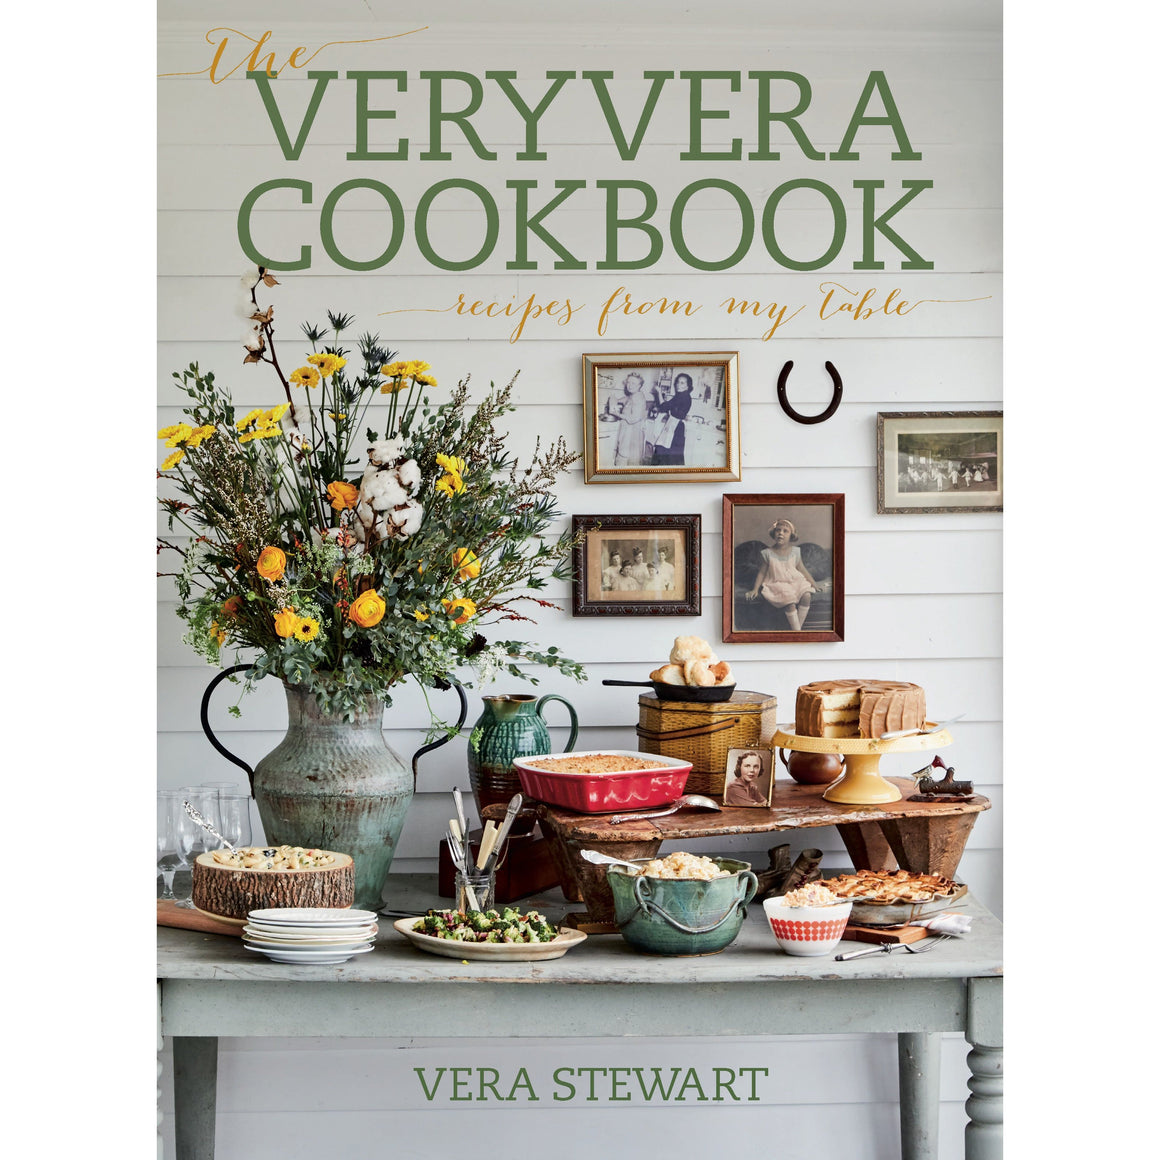 Very Vera Cookbook Collection